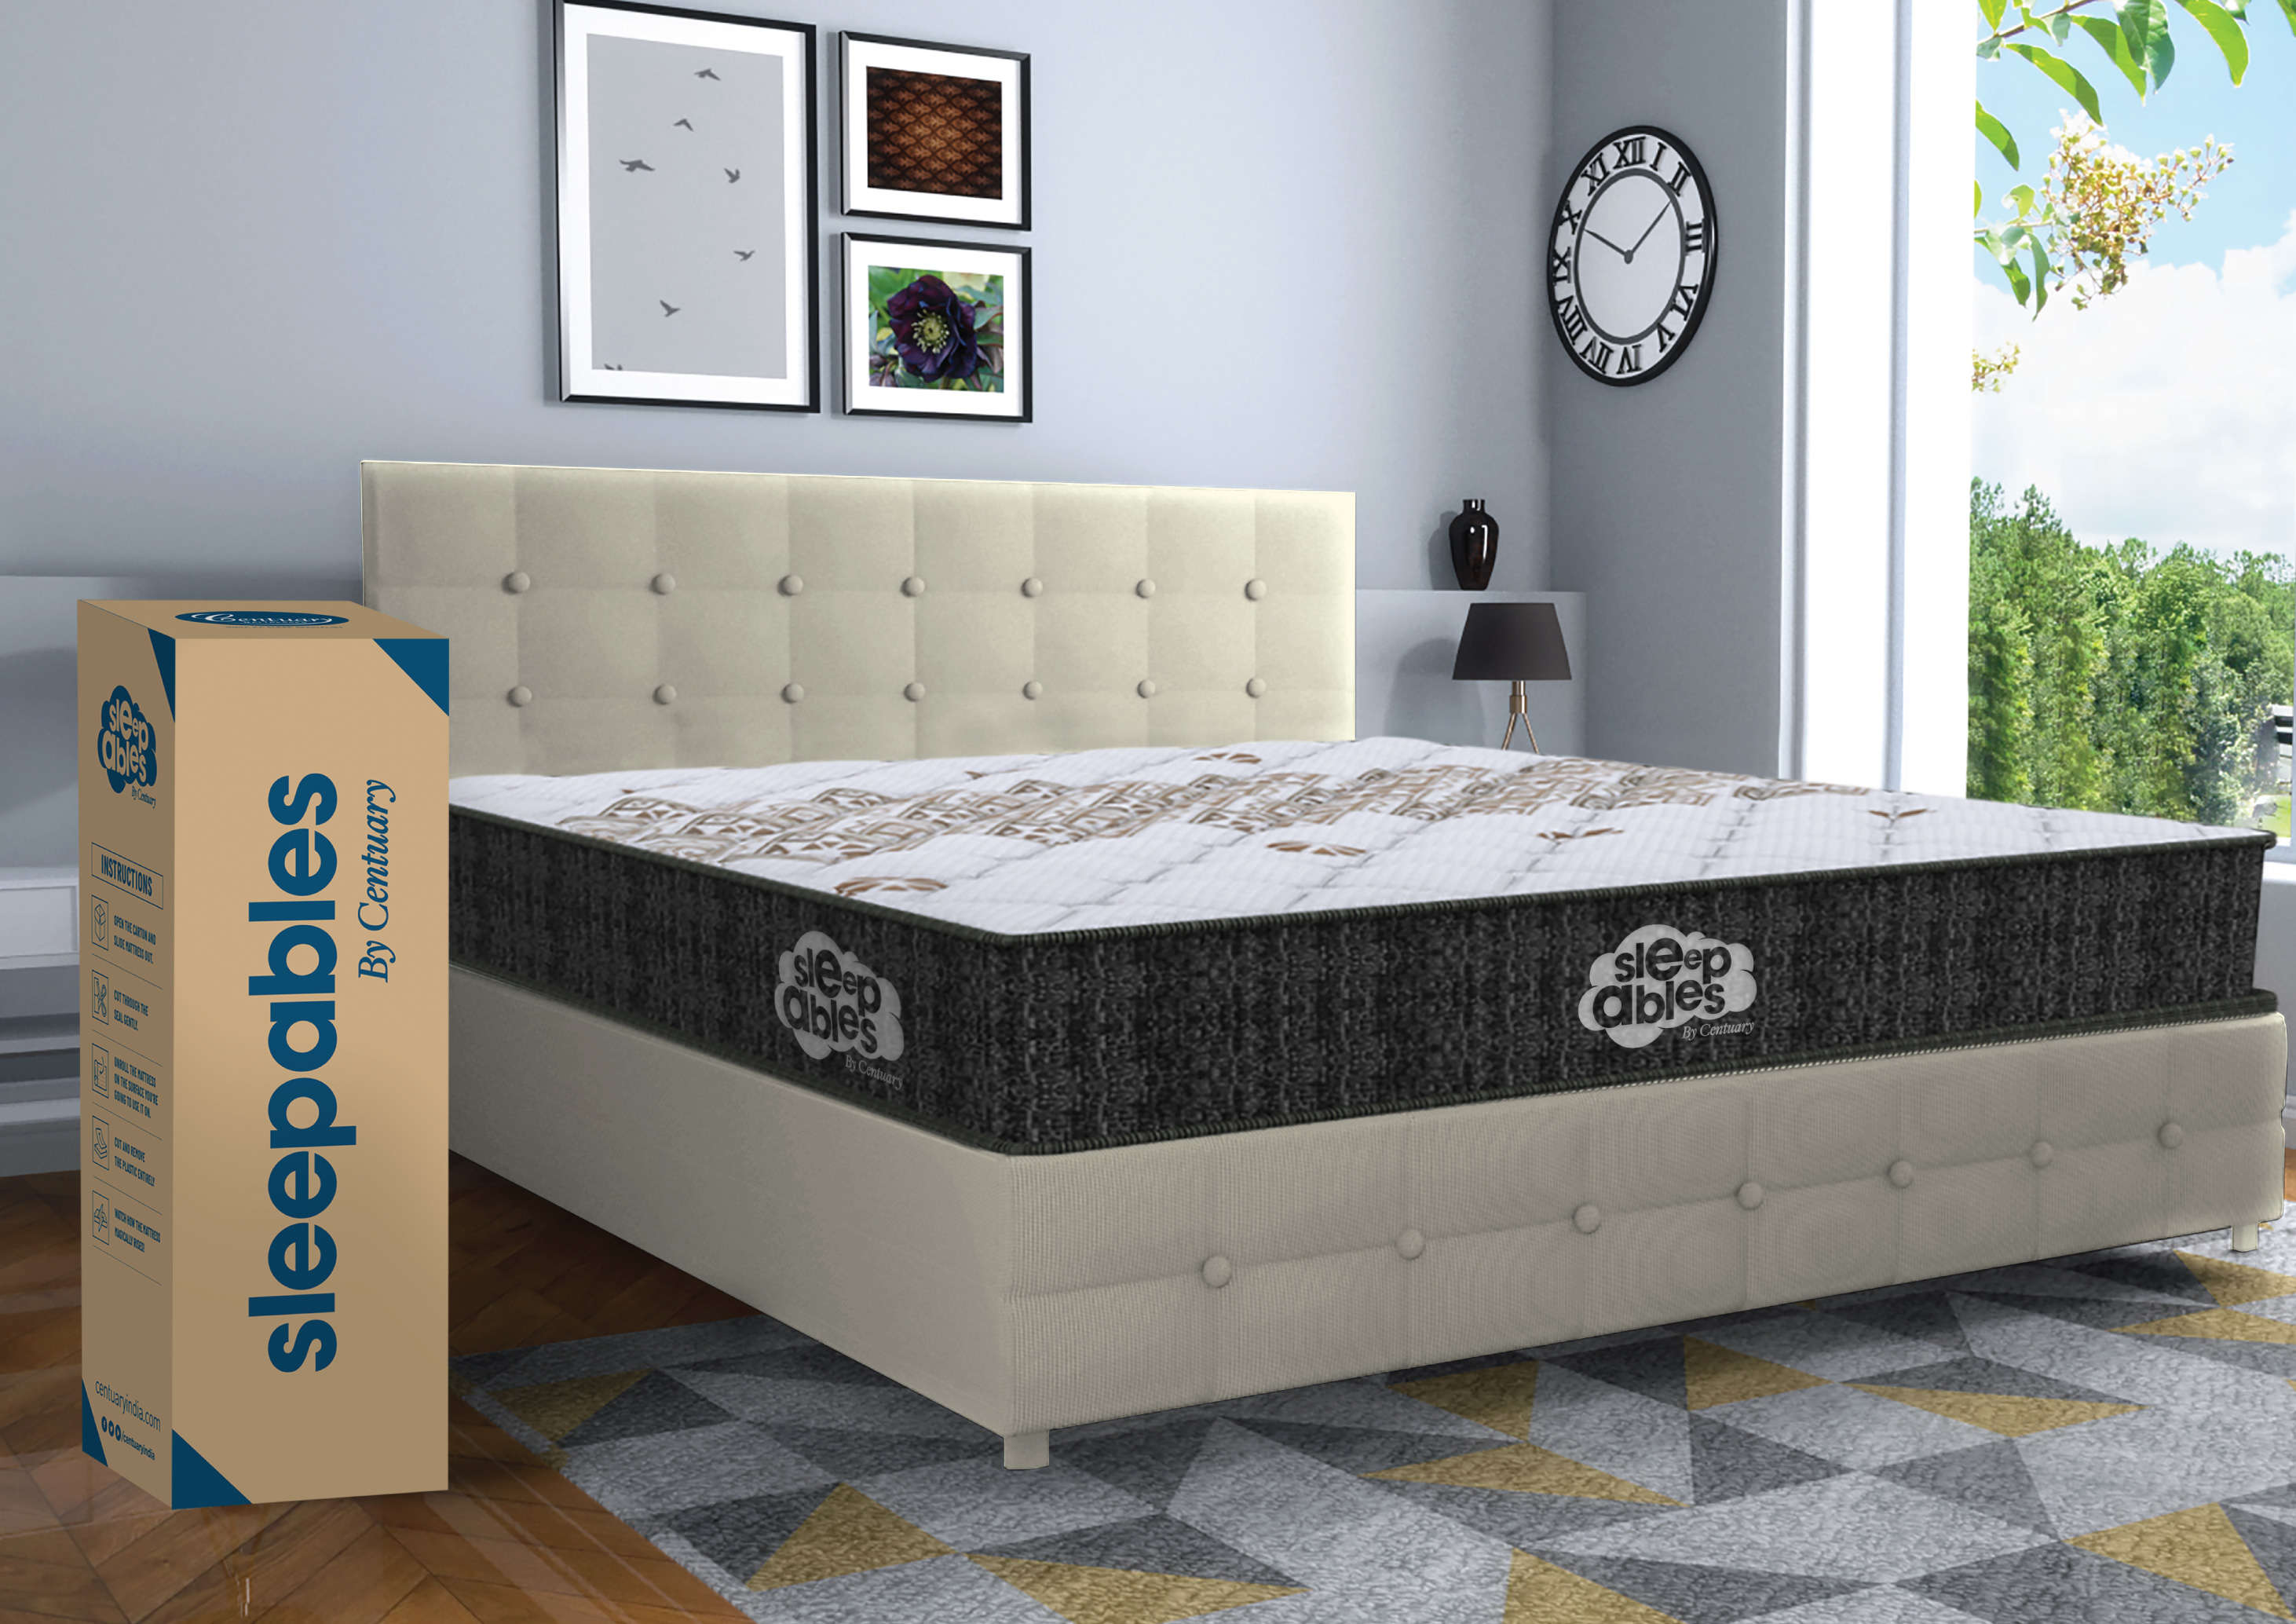 centuary mattress 4x6 price